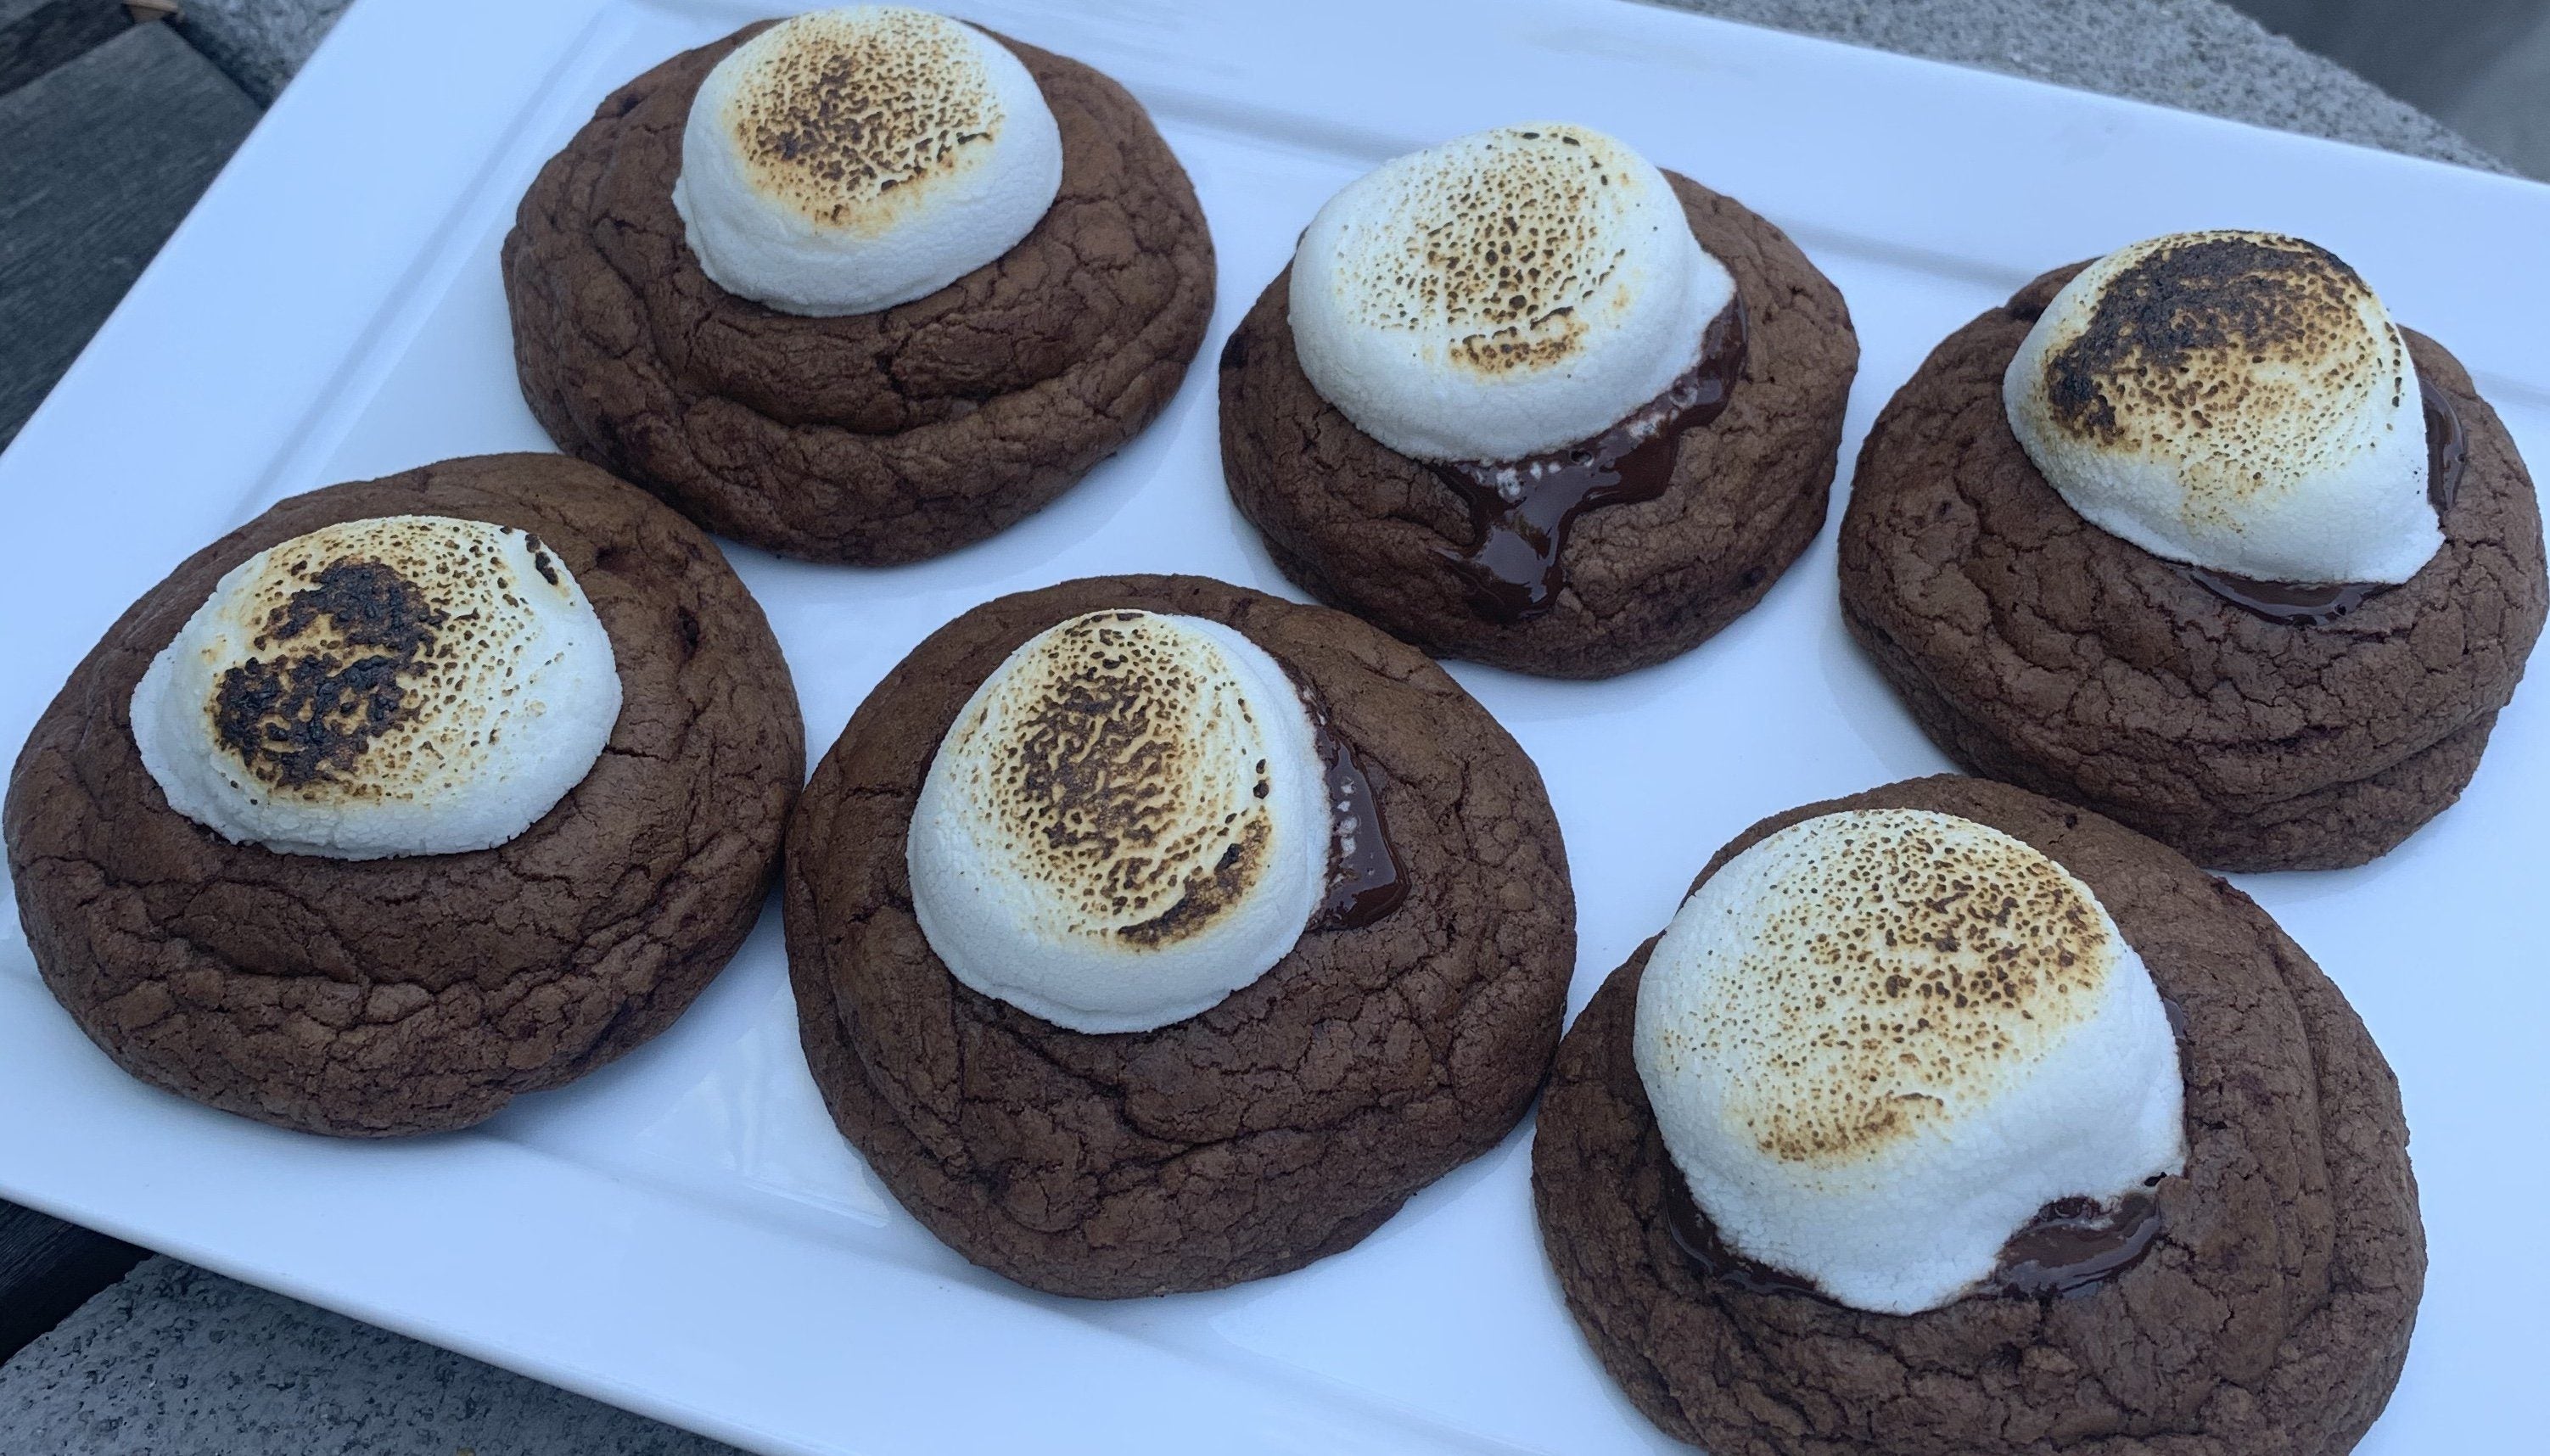 Hot Chocolate Cookies